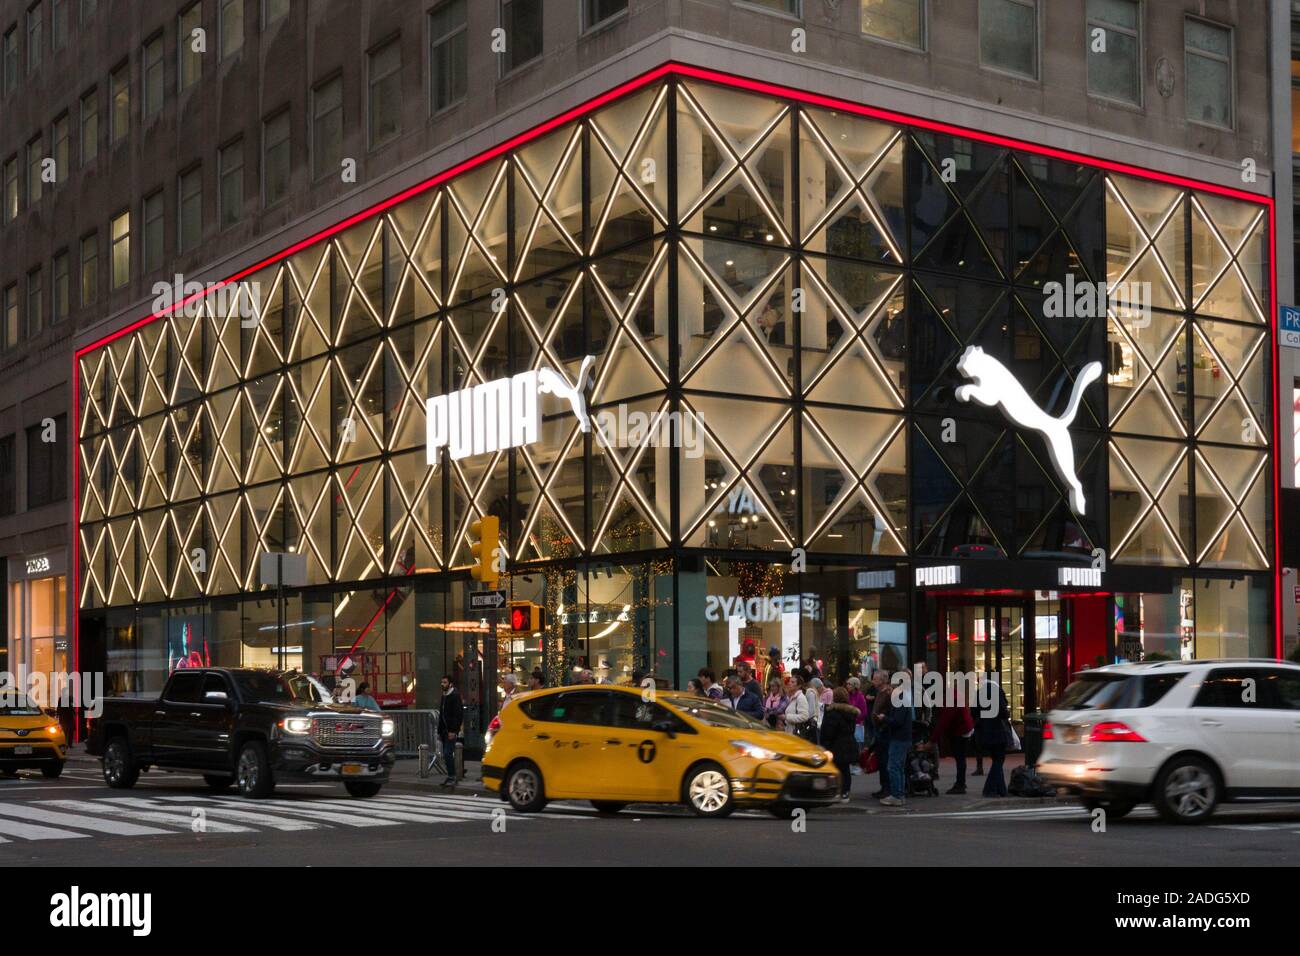 puma new york store